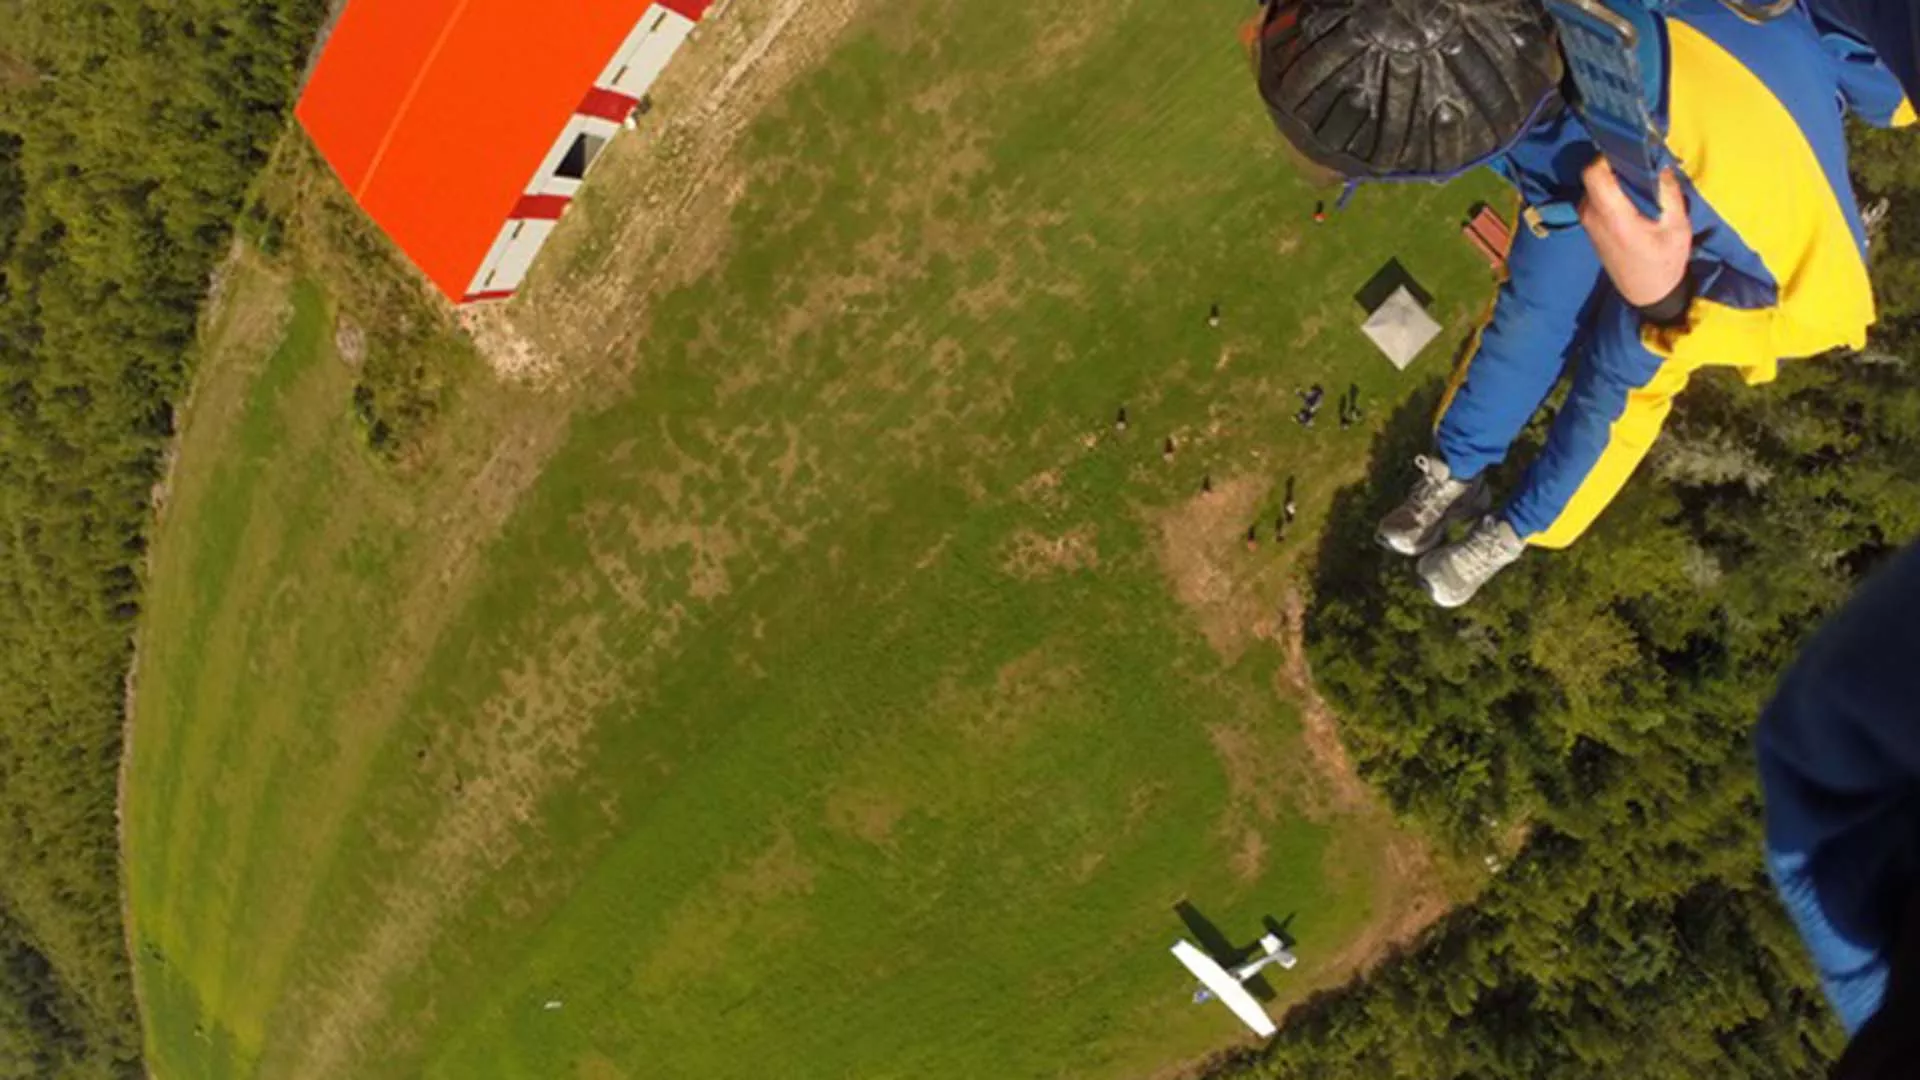 Atlantic School of Skydiving in Canada, North America | Skydiving - Rated 0.8